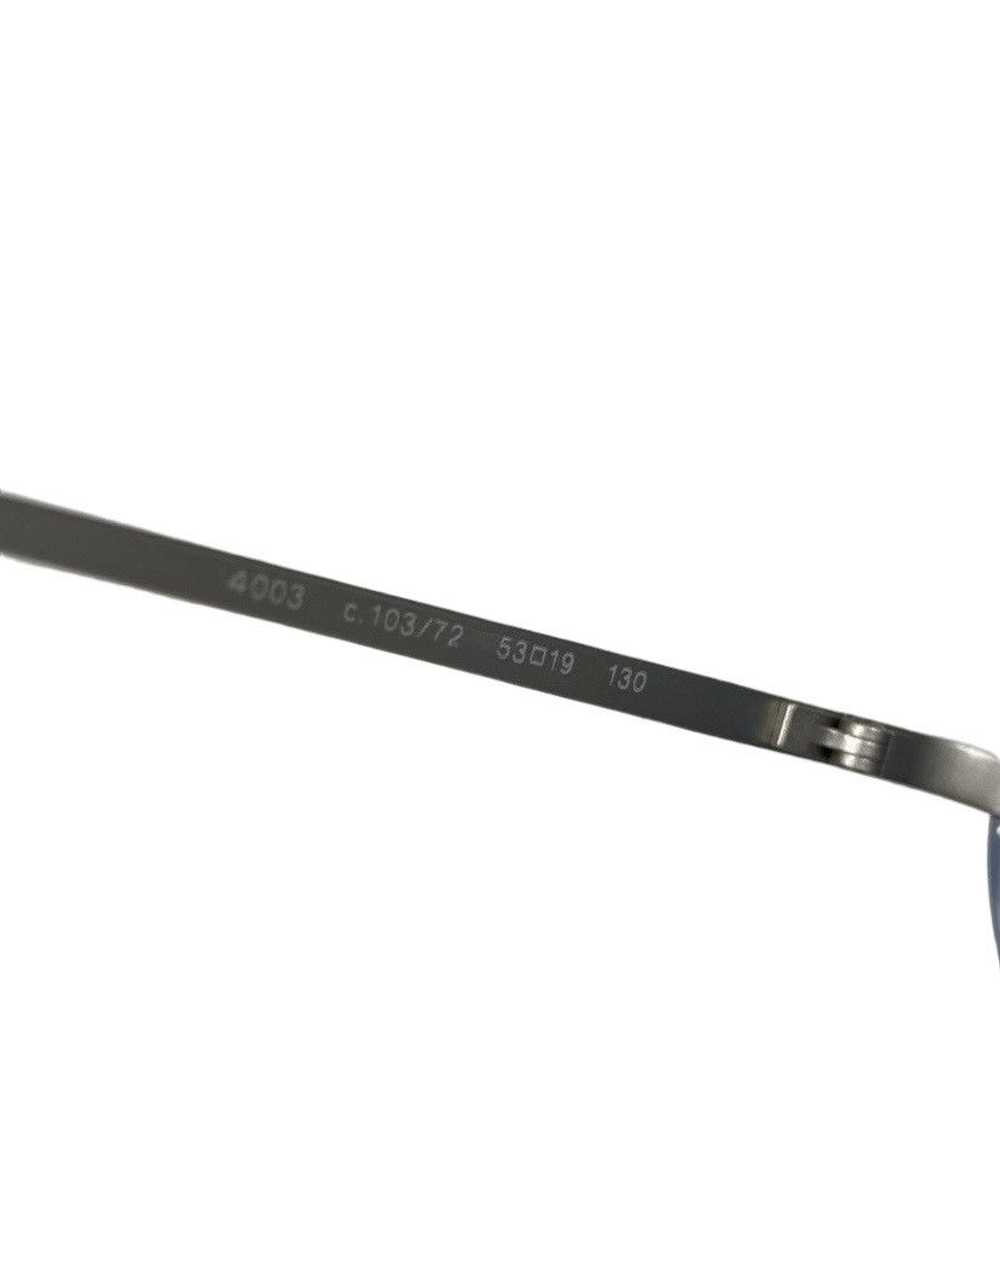 Chanel Chanel CC 103/72 Logo Sunglasses - image 5